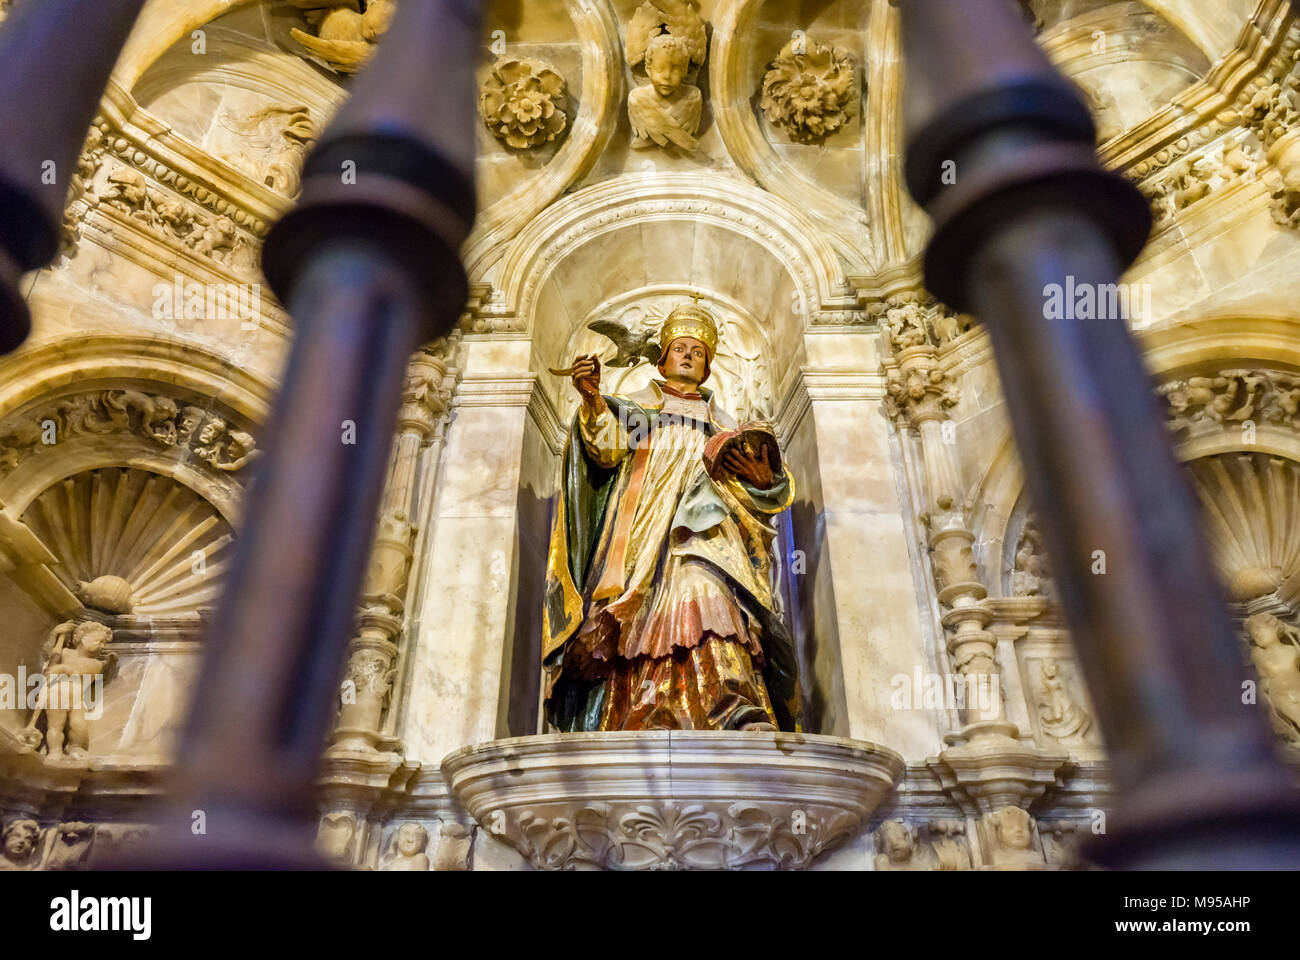 Die gotische Skulptur in der Kapelle der Kathedrale von Sevilla (Catedral de Santa María de la Sede) in Sevilla, Andalusien, Spanien Stockfoto